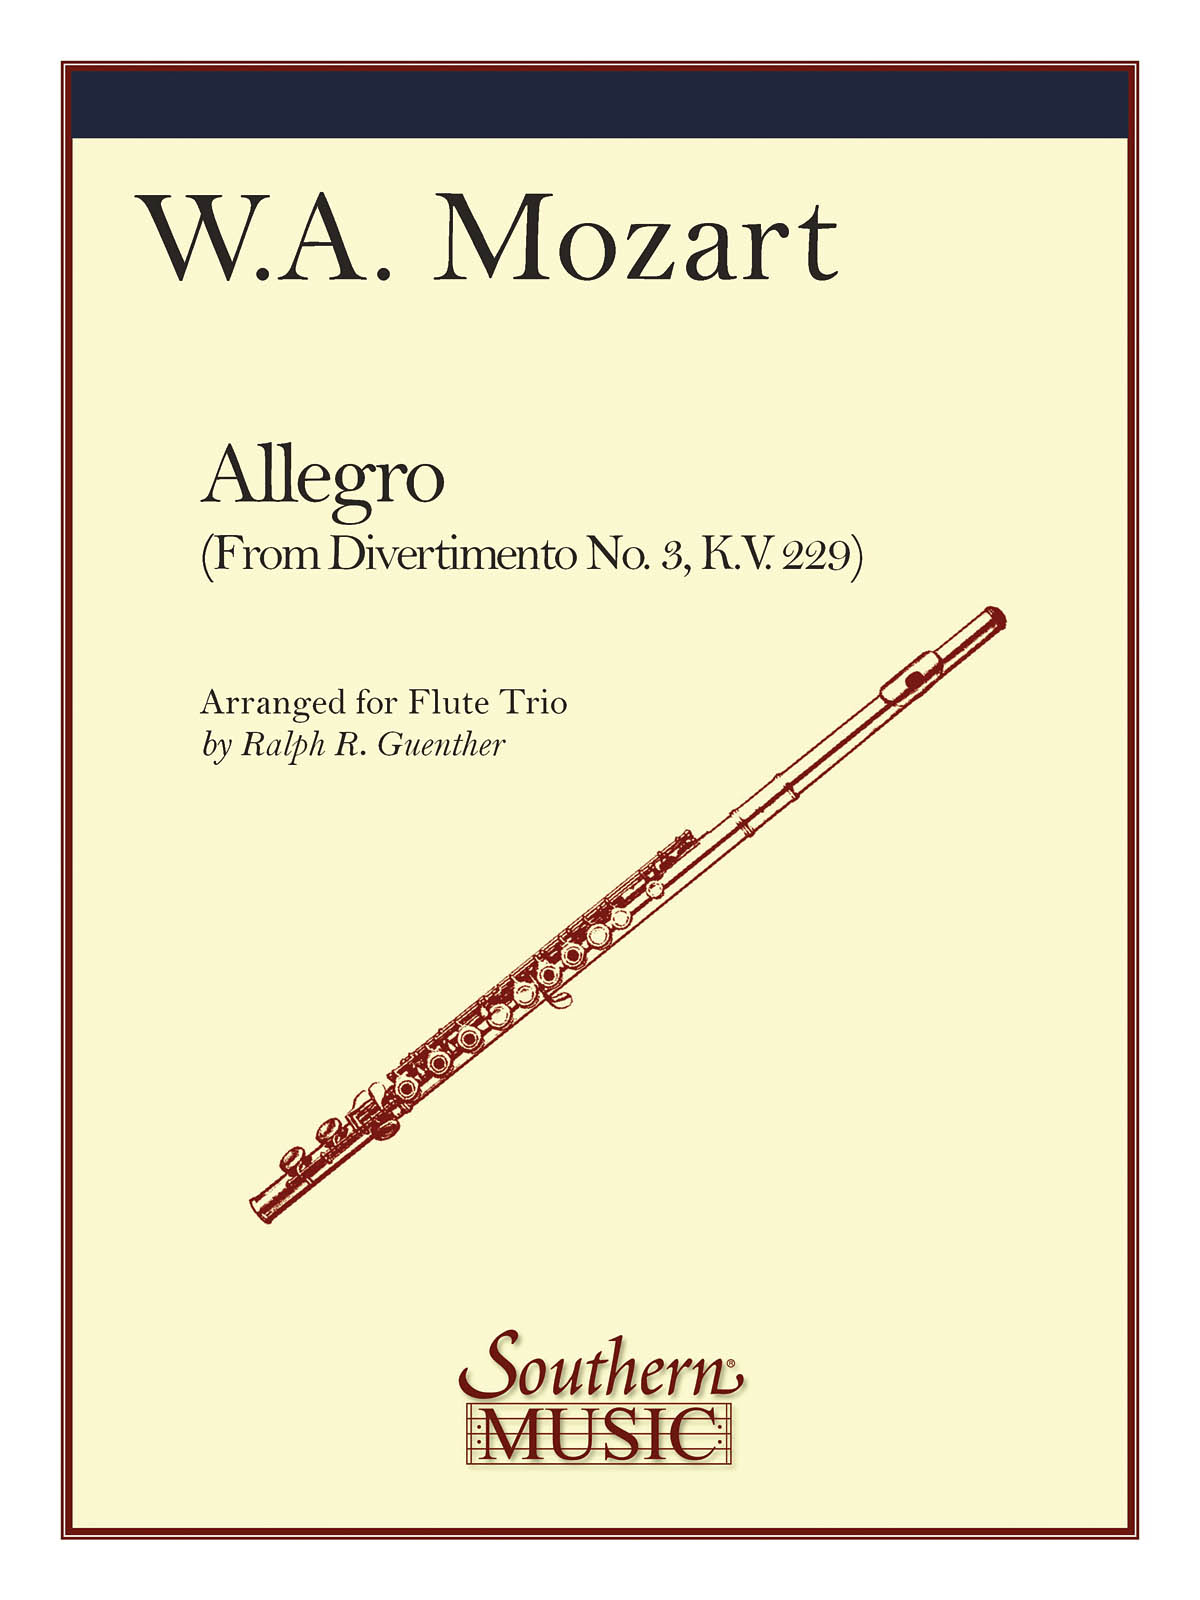 Allegro (From Divertimento No 3 K229)